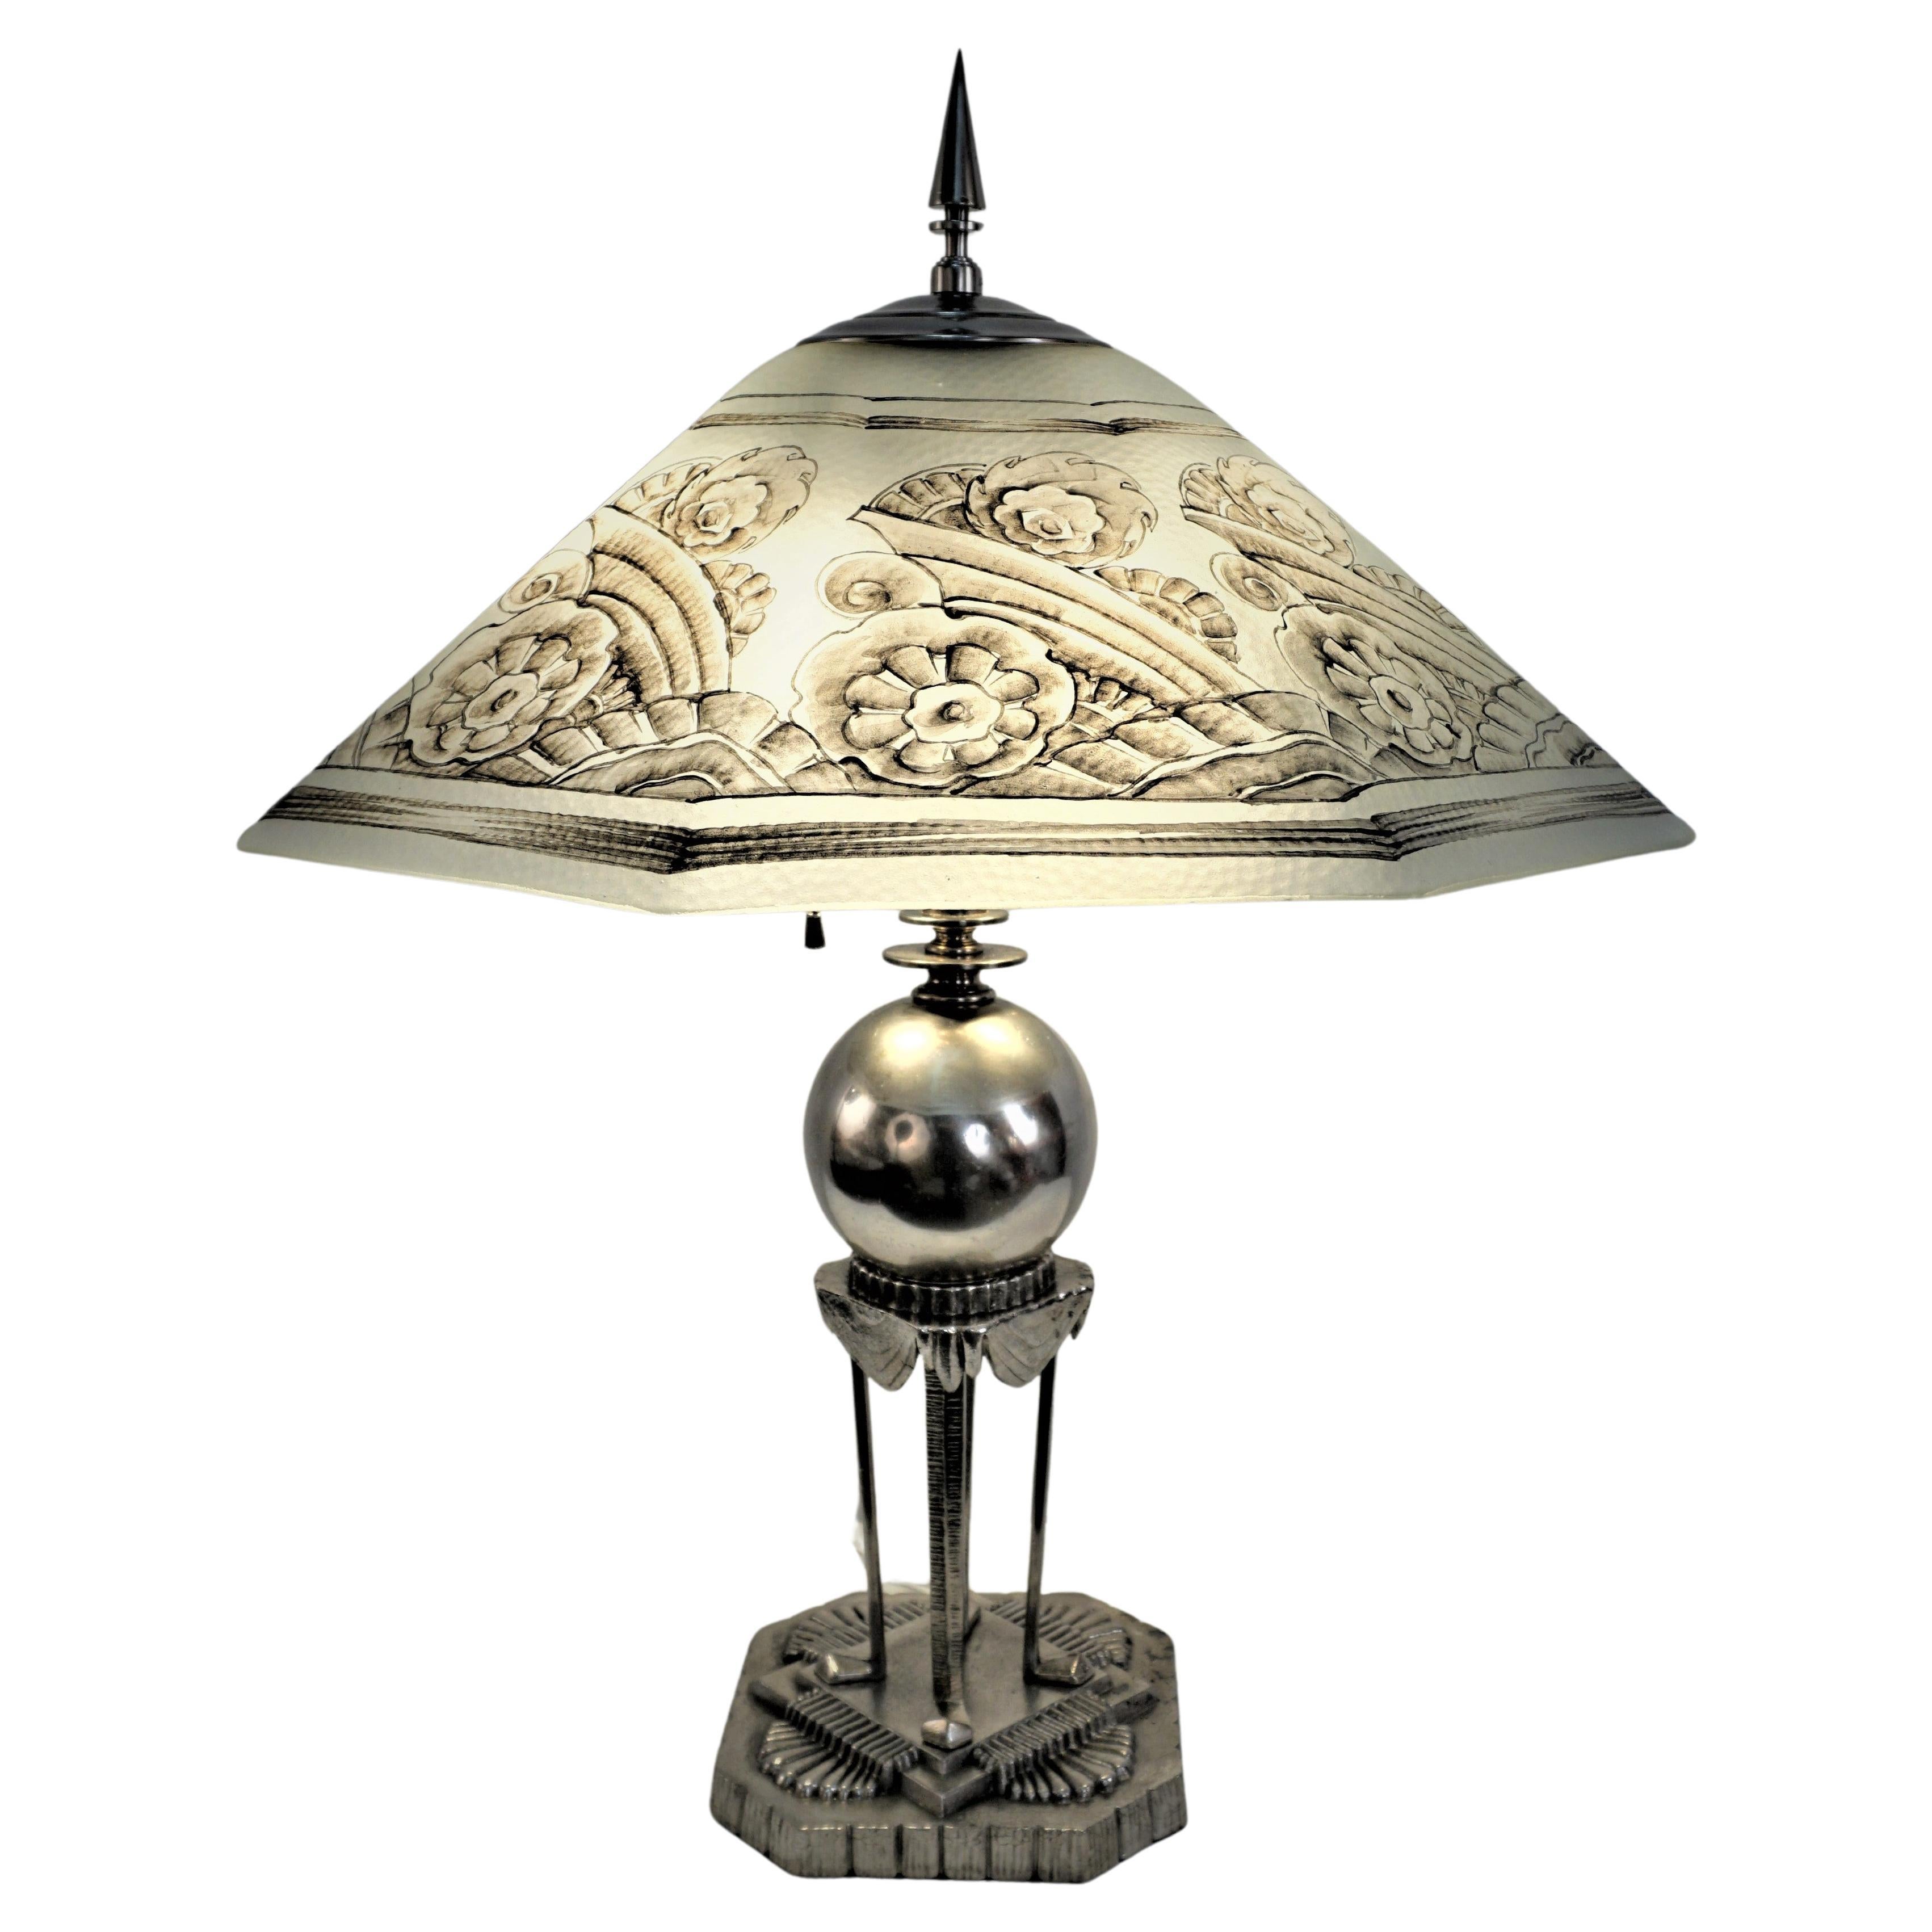 L'Autum 1930's Painted Glass Art Deco Table Lamp